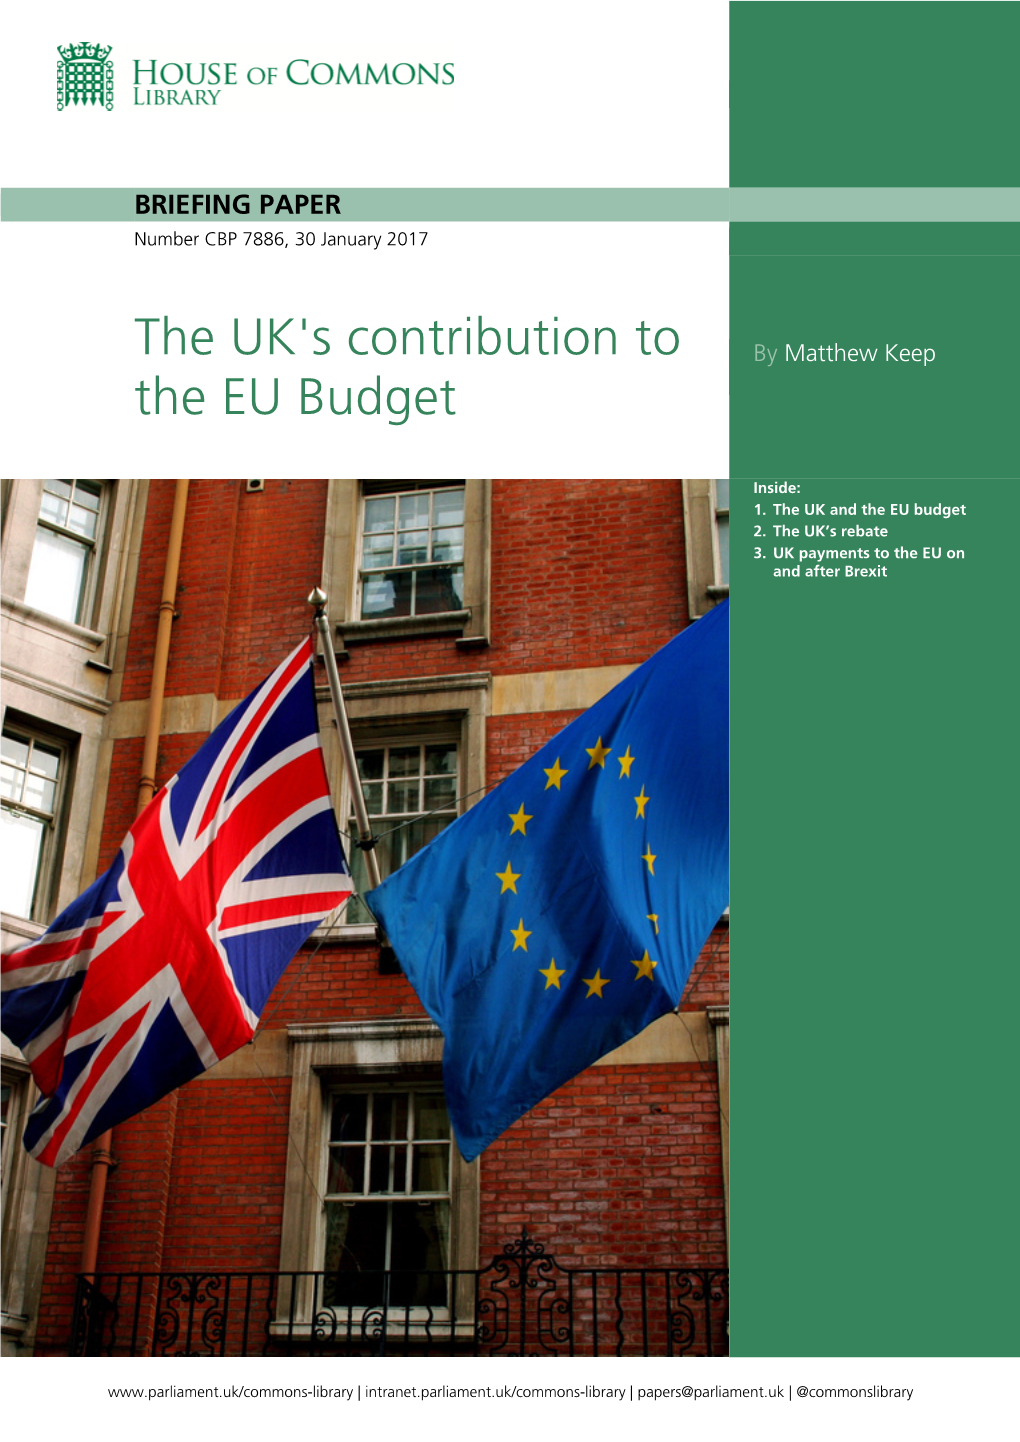 The UK's Contribution to the EU Budget